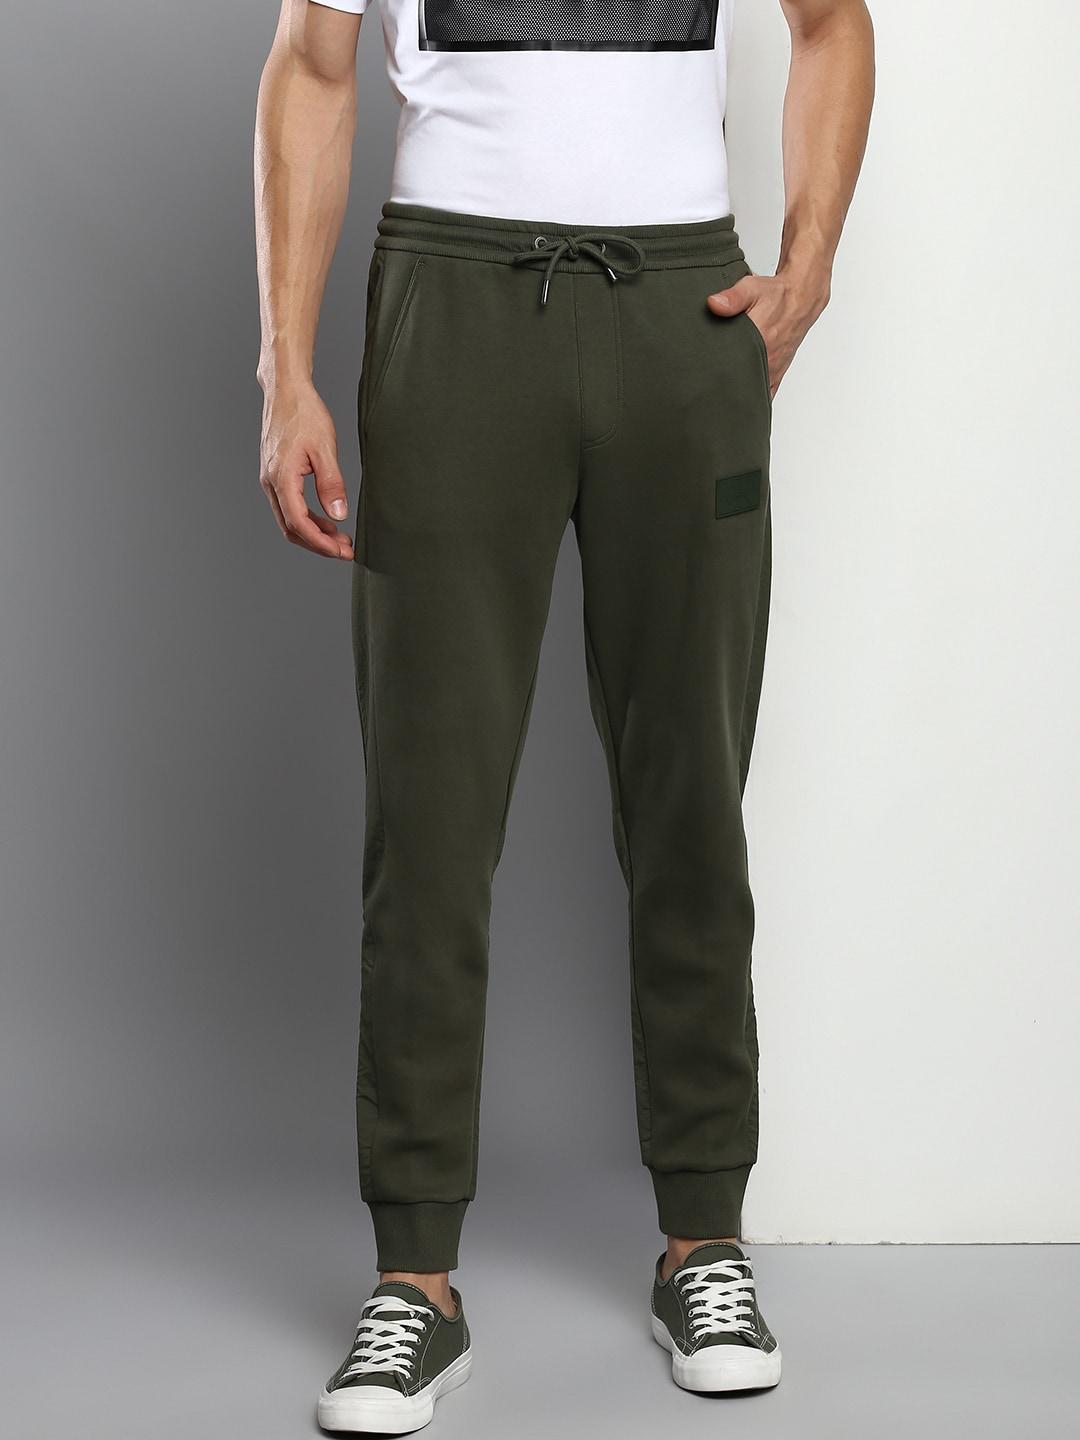 calvin-klein-jeans-men-olive-green-solid-regular-fit-joggers